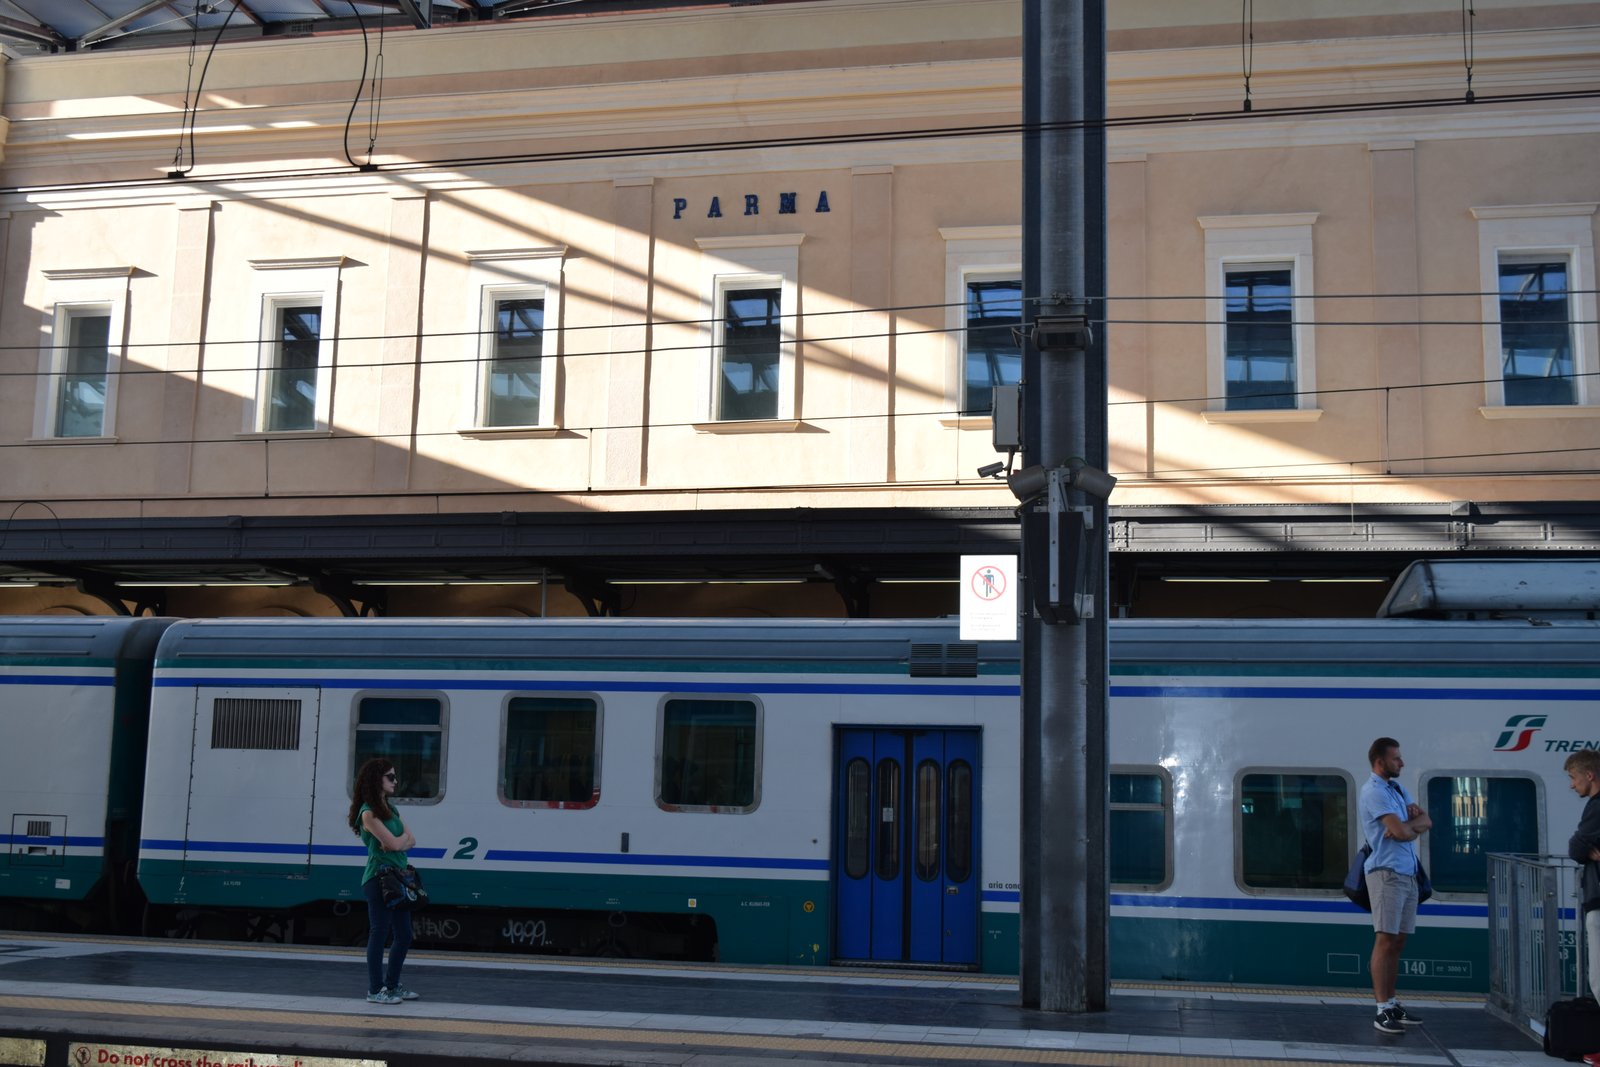 Parma train station